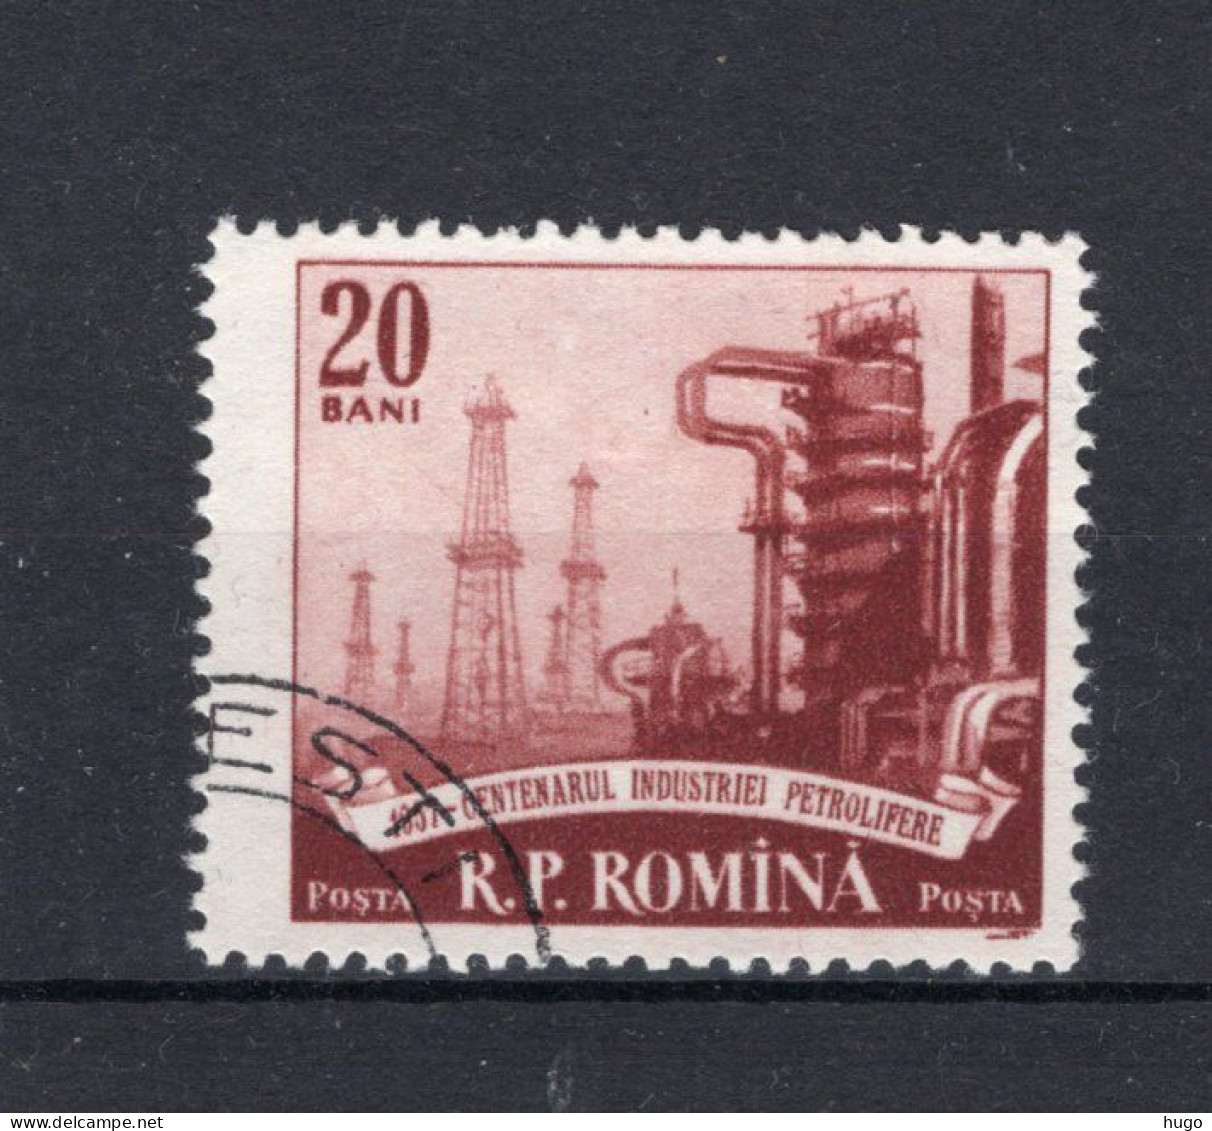 ROEMENIE Yt. 1542° Gestempeld 1957 - Used Stamps